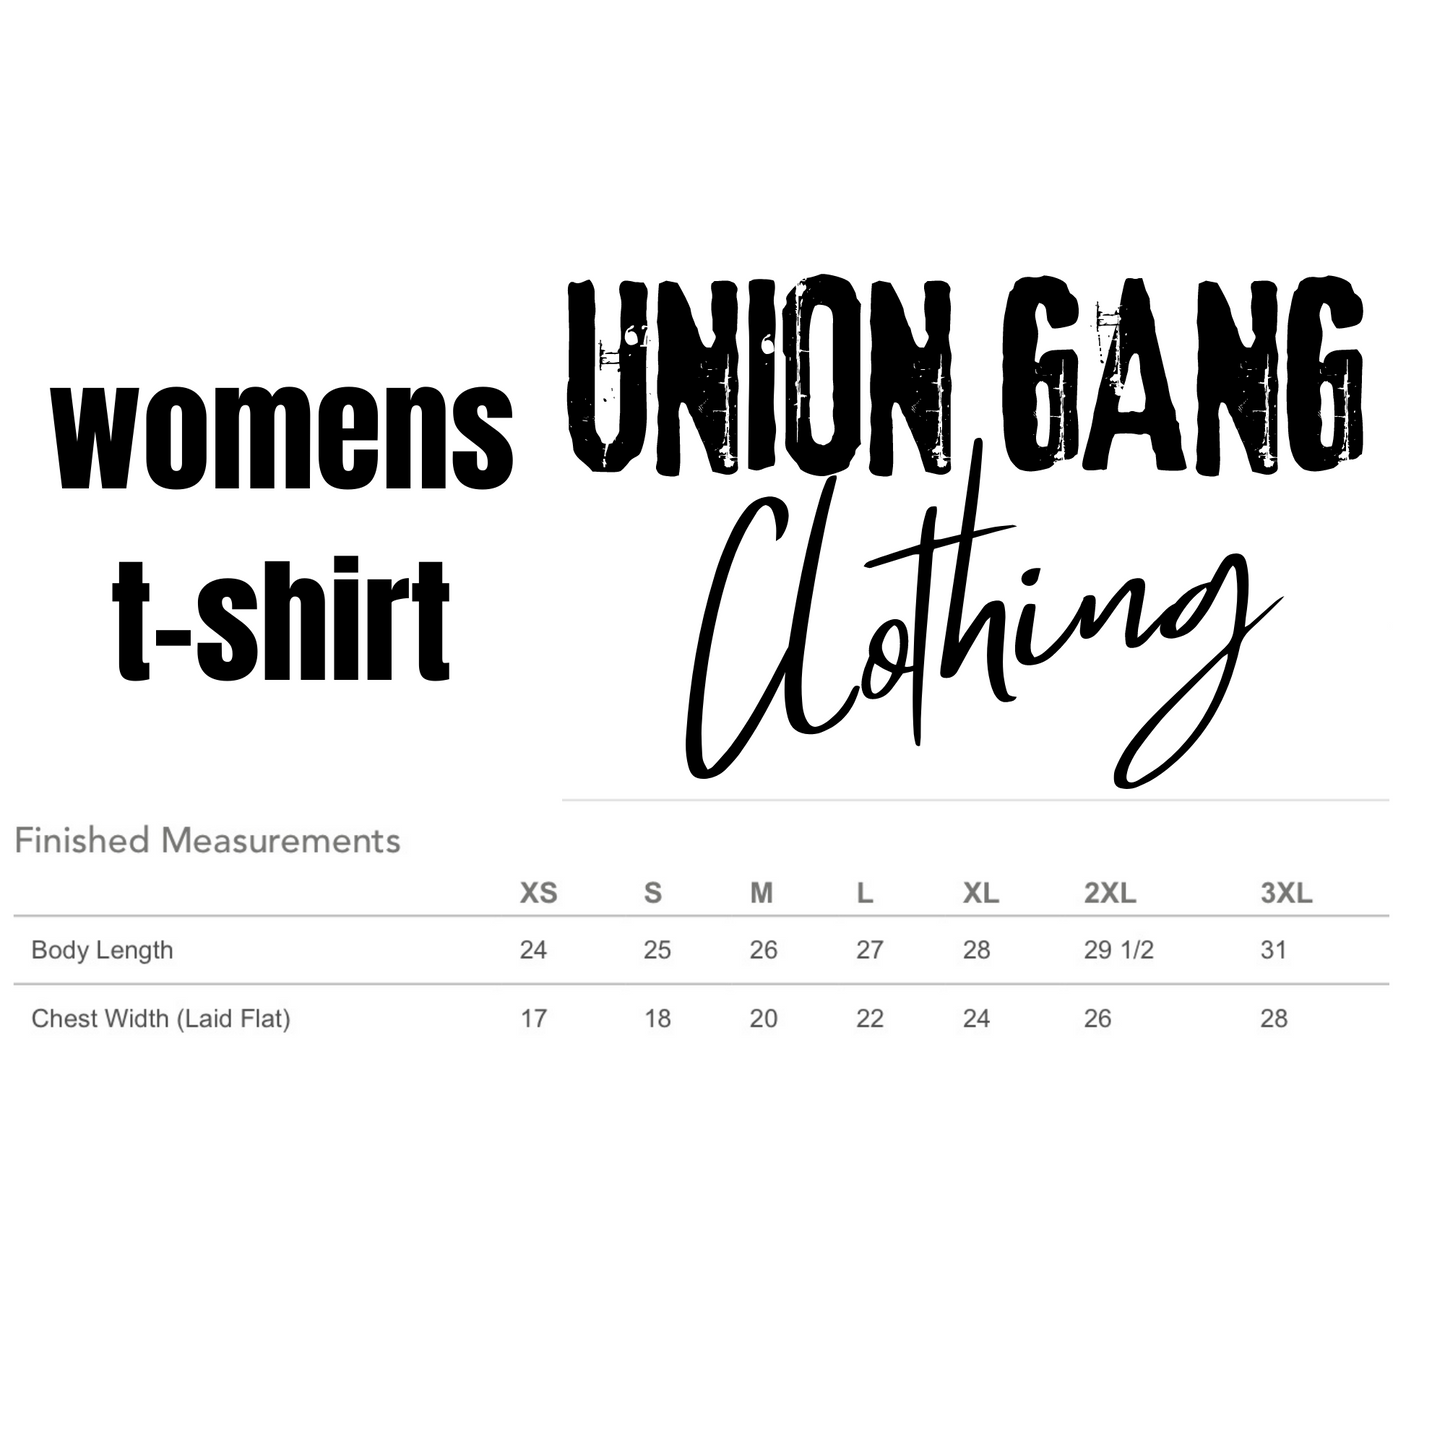 WOMENS UNION GANG T-SHIRT